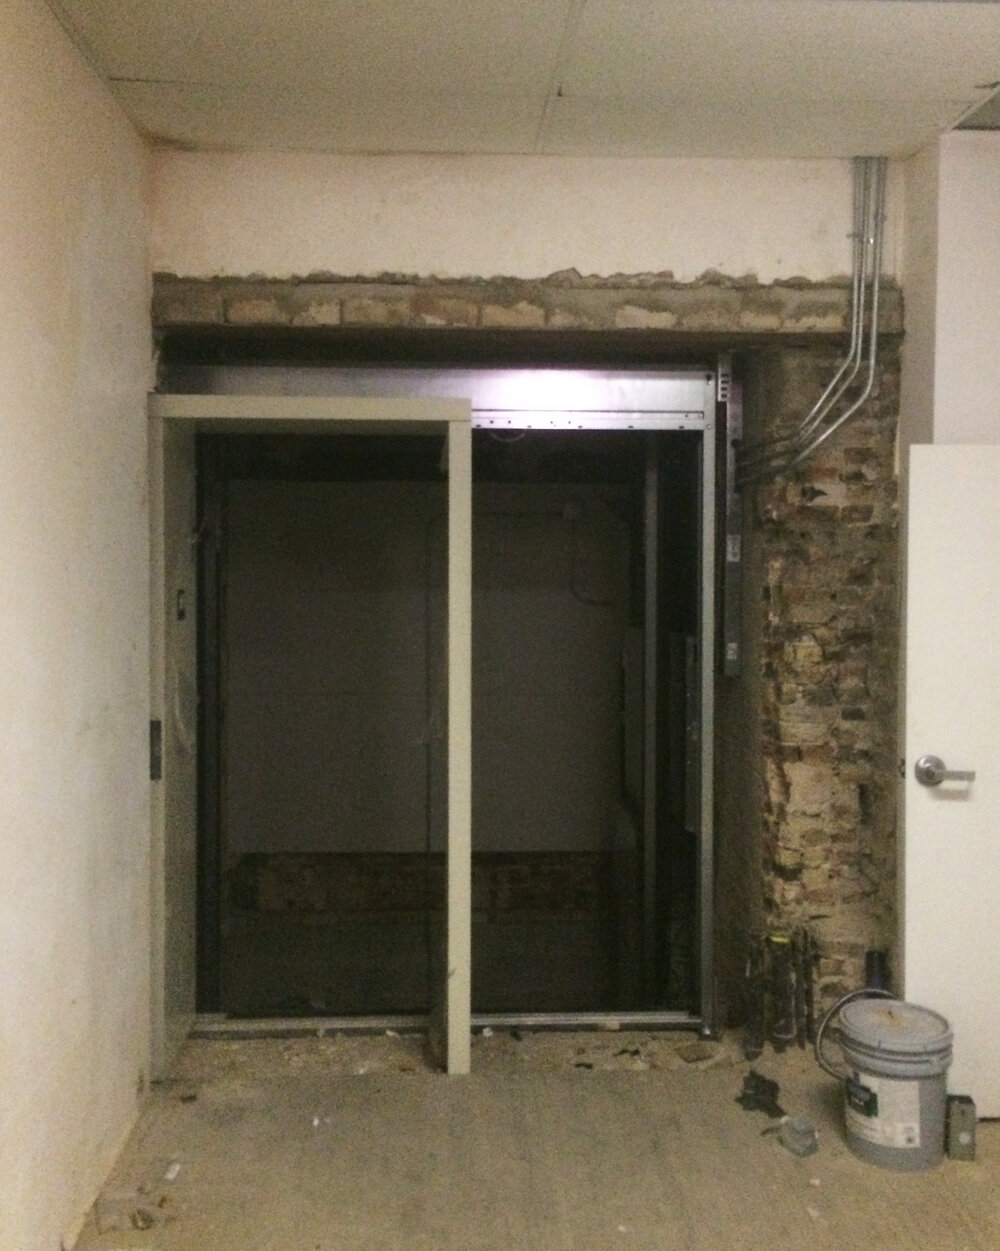 Elevator shaft renovation &amp; passenger elevator installation in progress